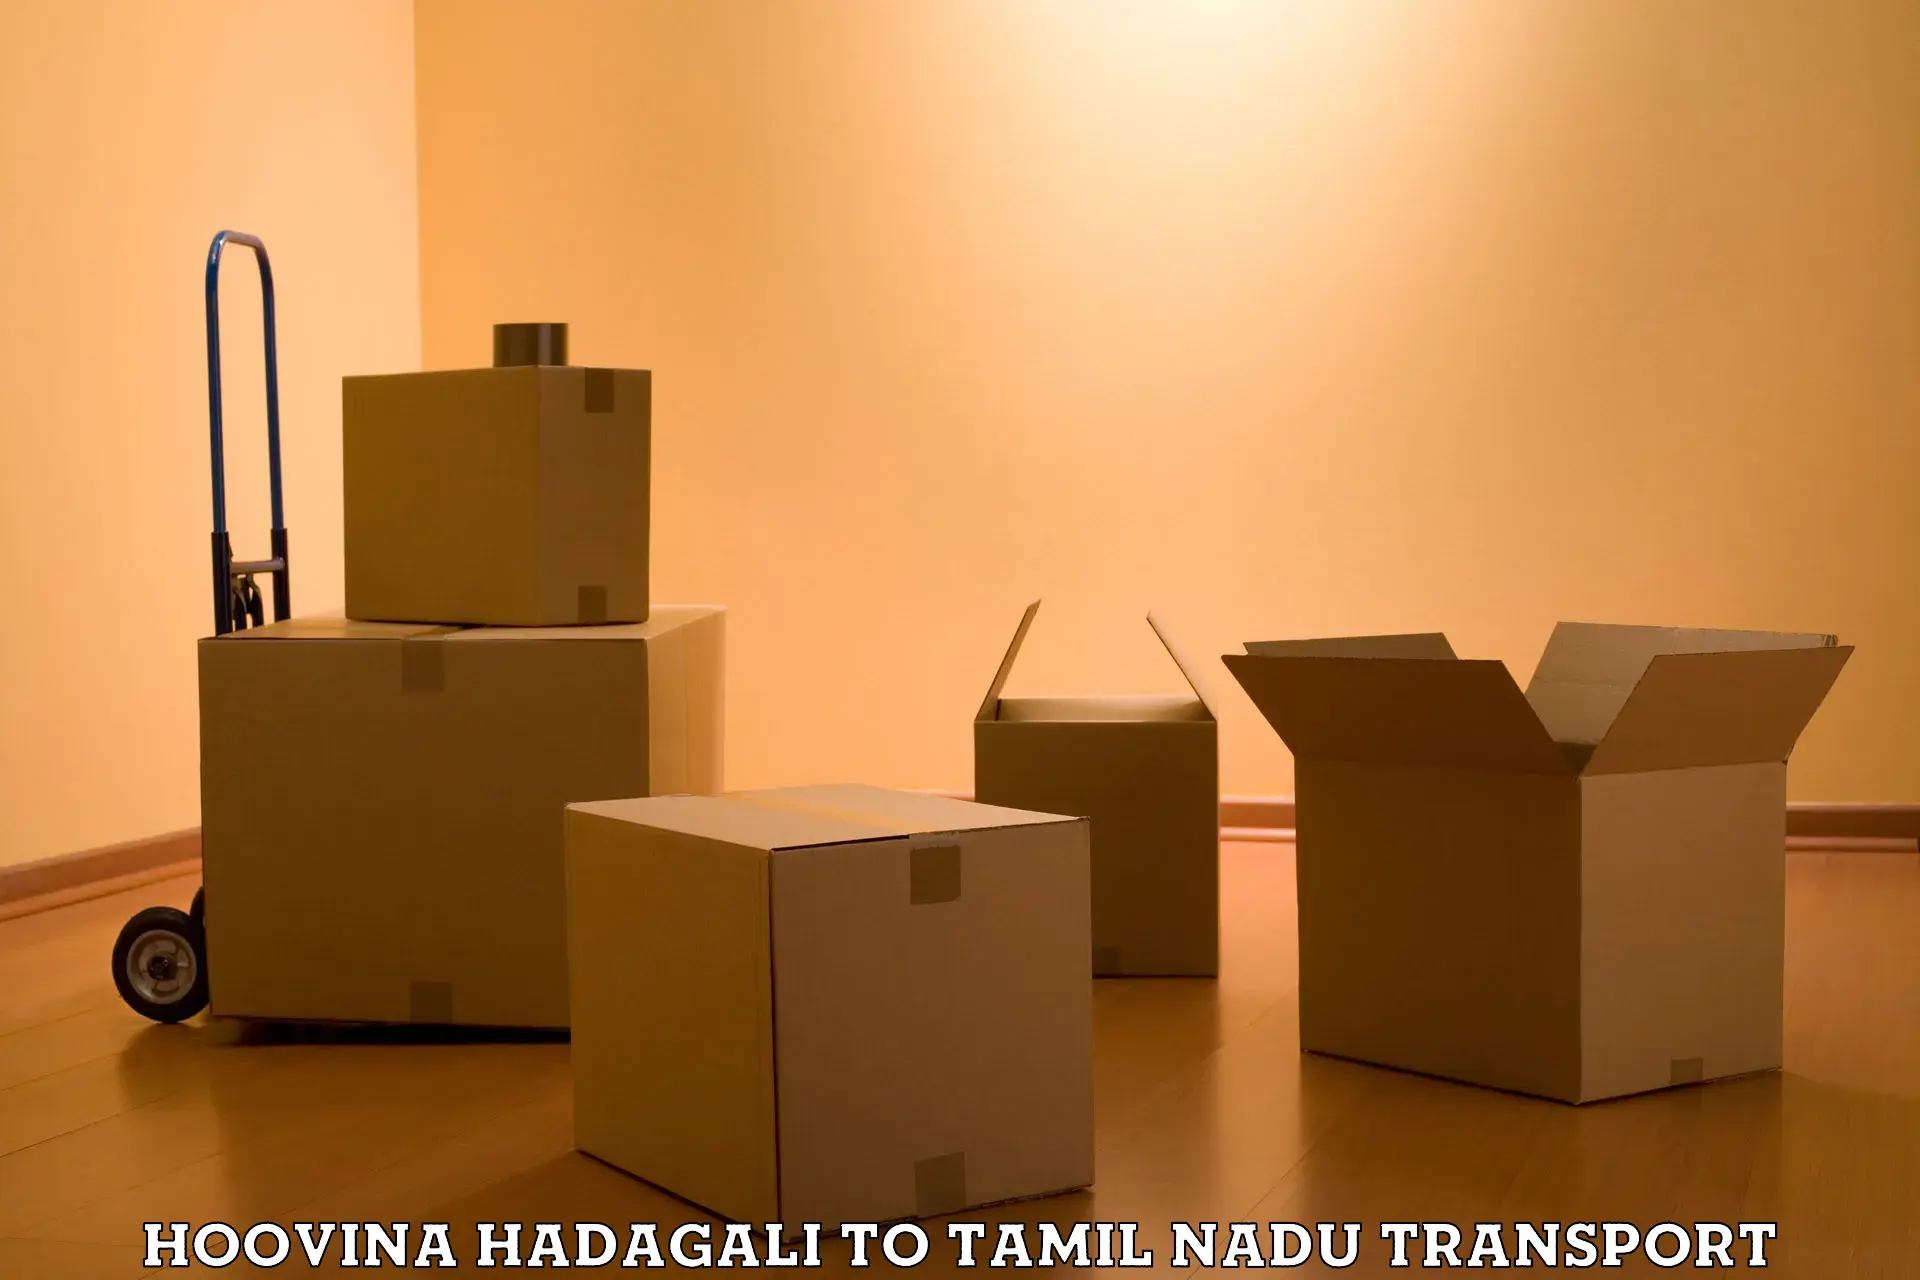 Container transport service Hoovina Hadagali to Tamil Nadu